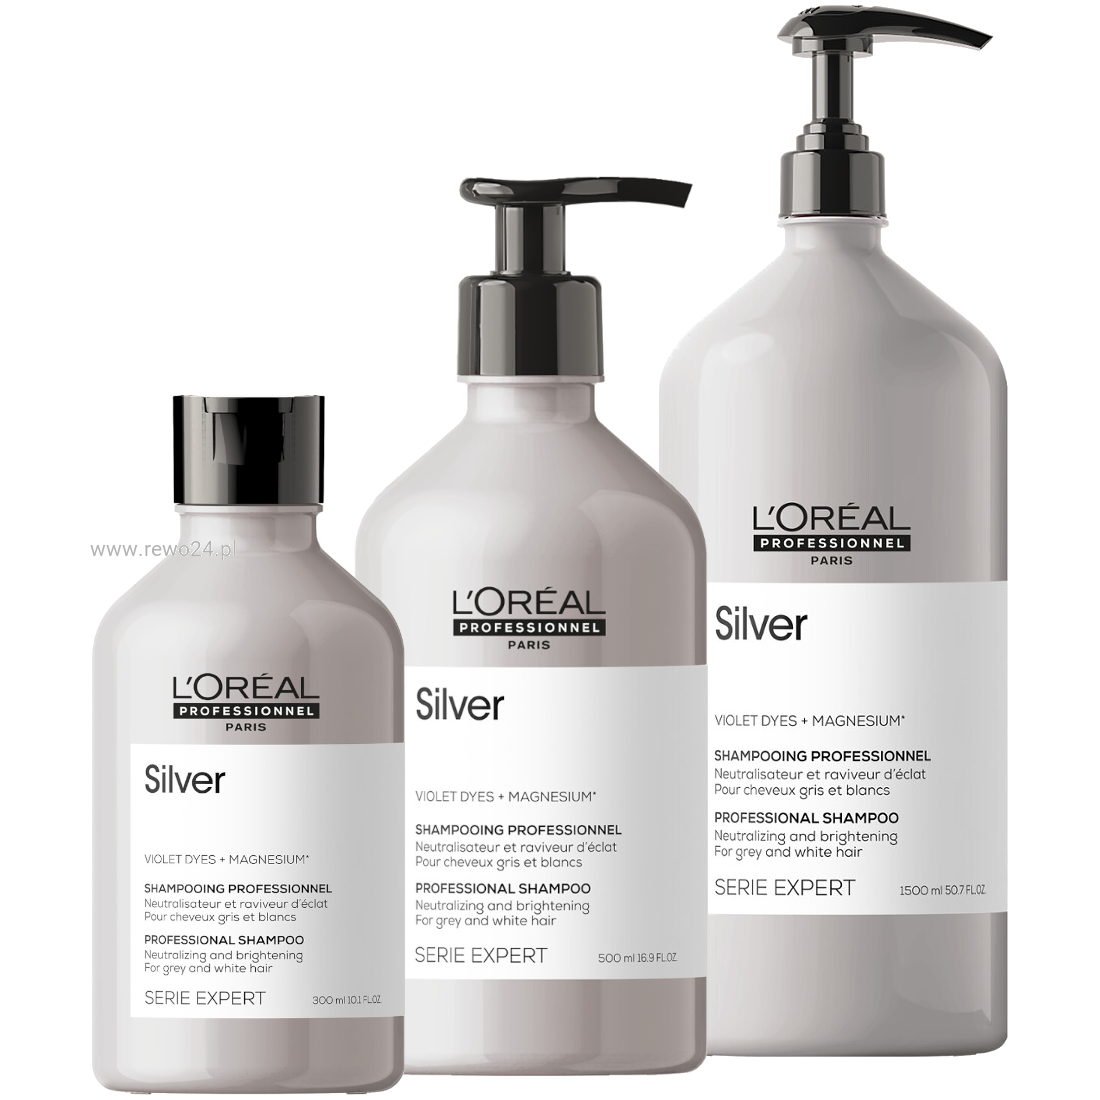 szampon loreal silver opinie